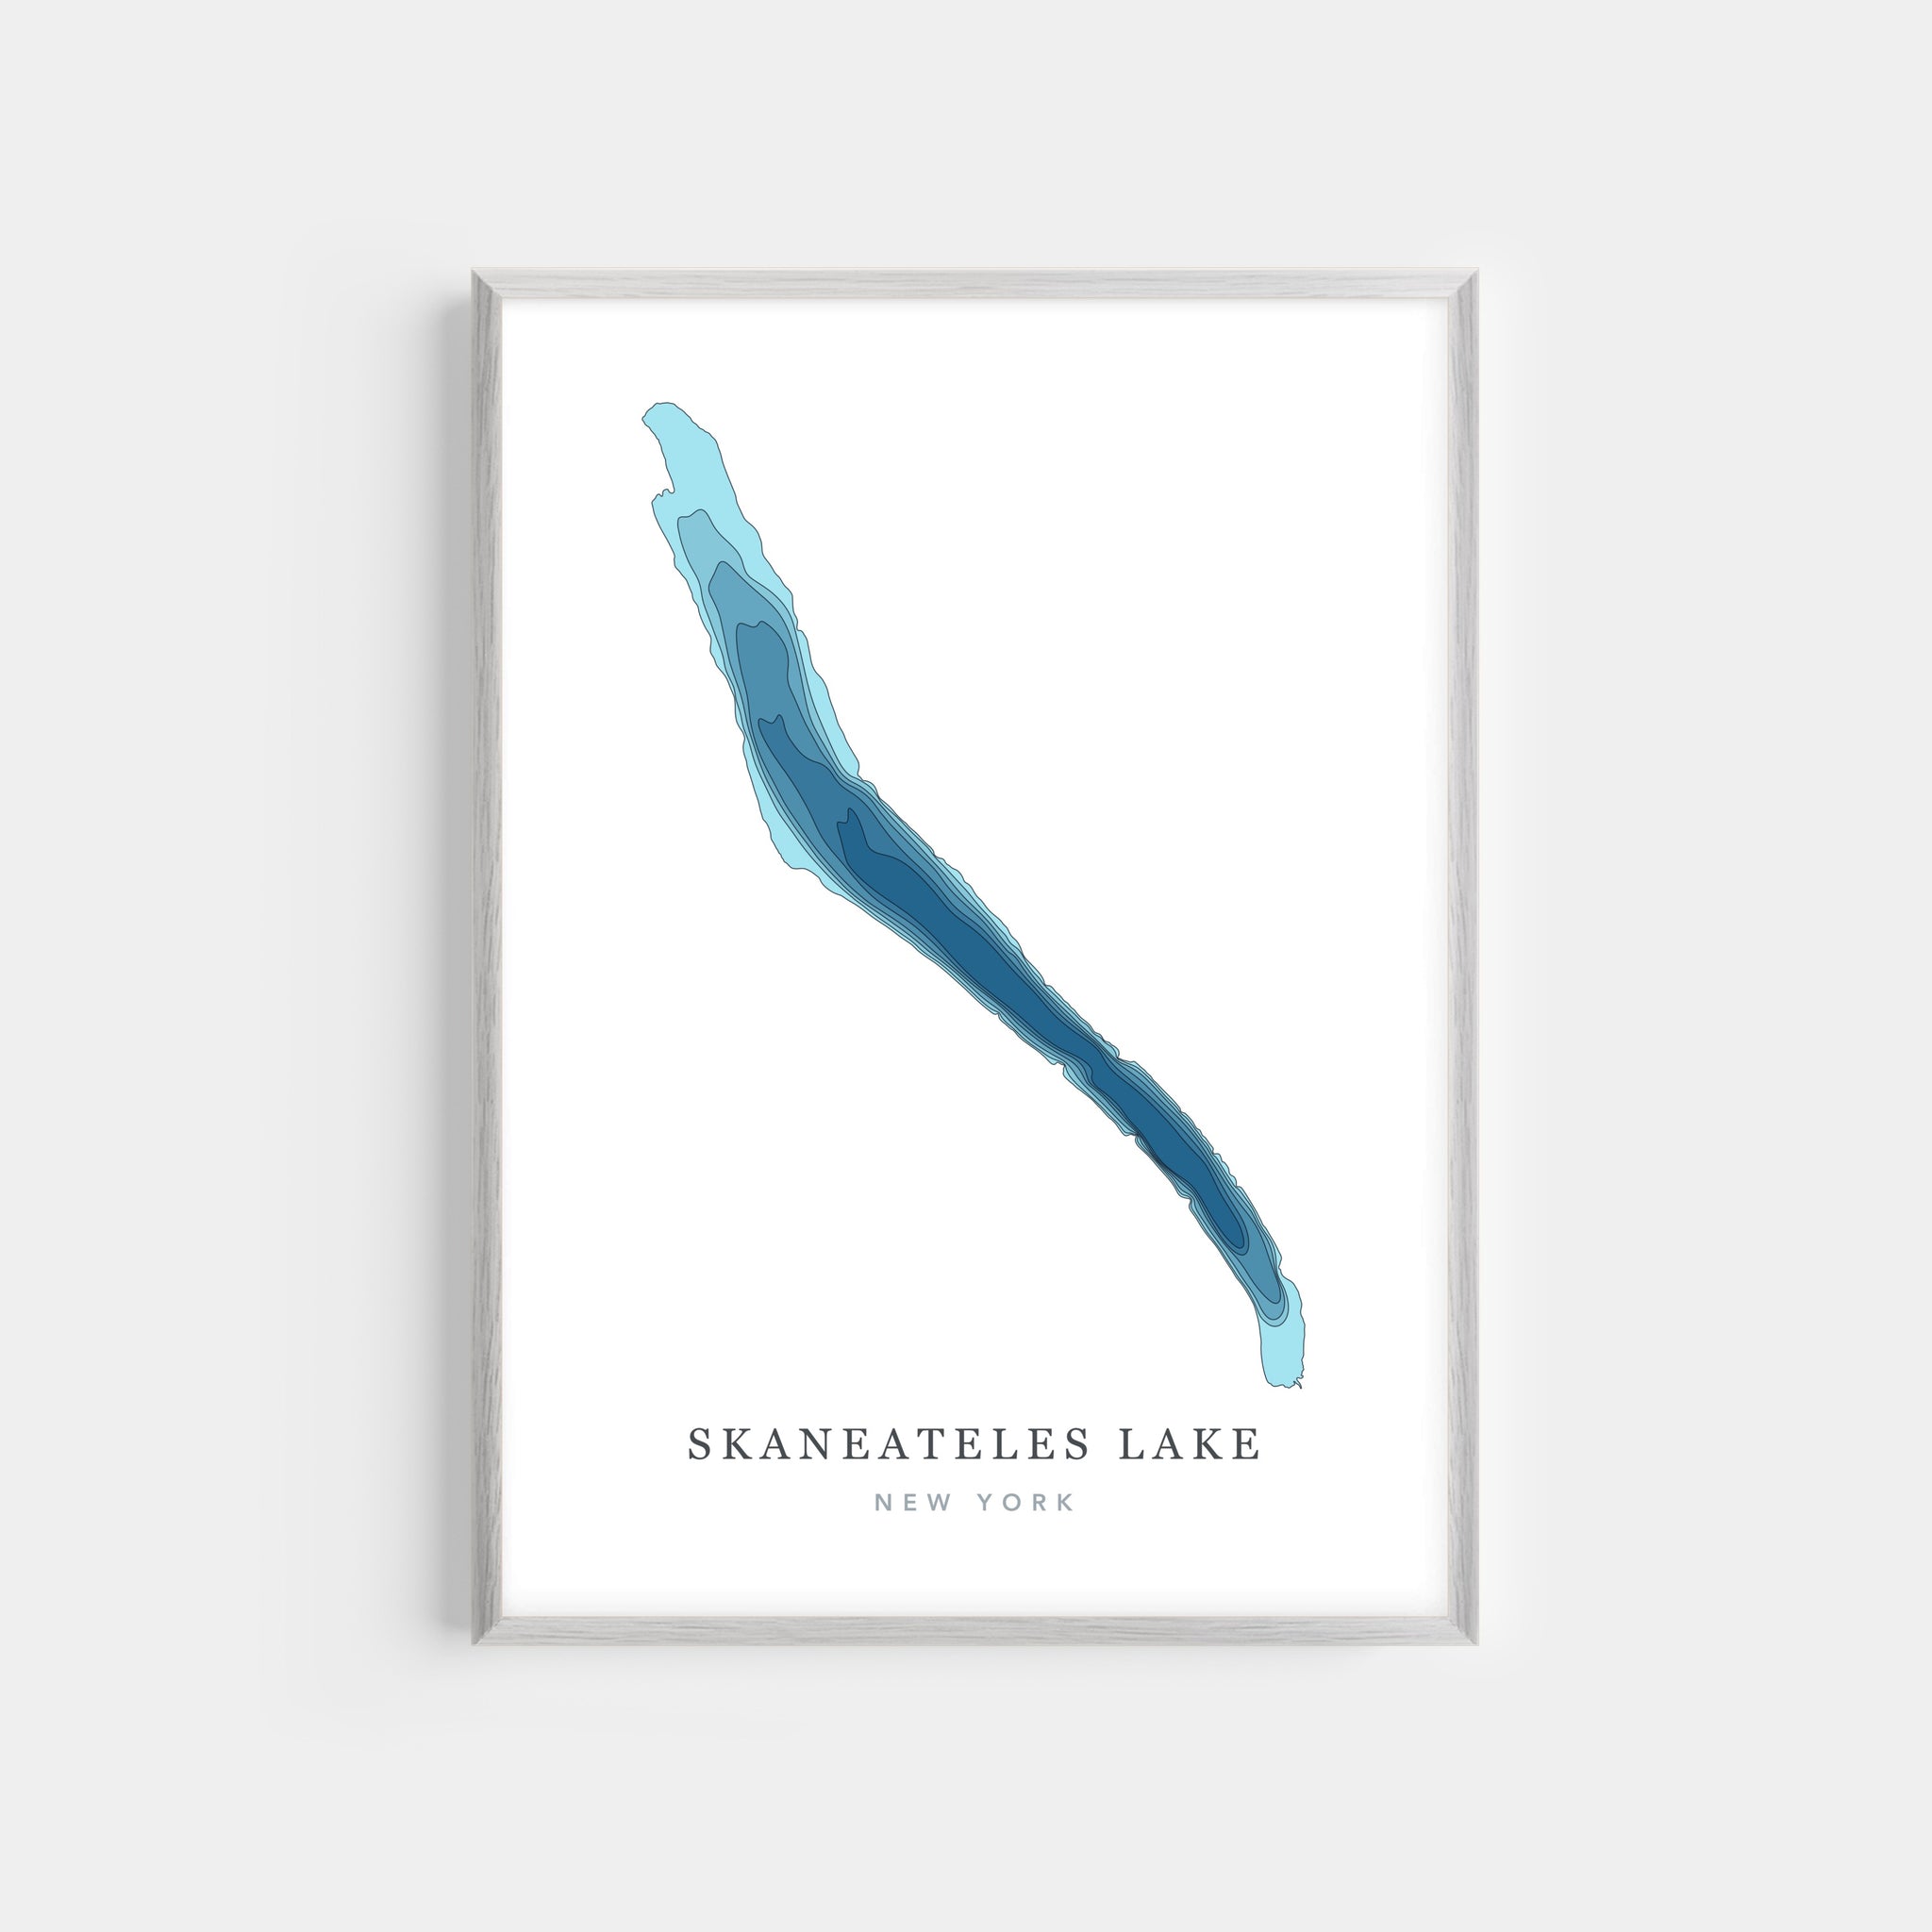 Skaneateles Lake, New York | Photo Print